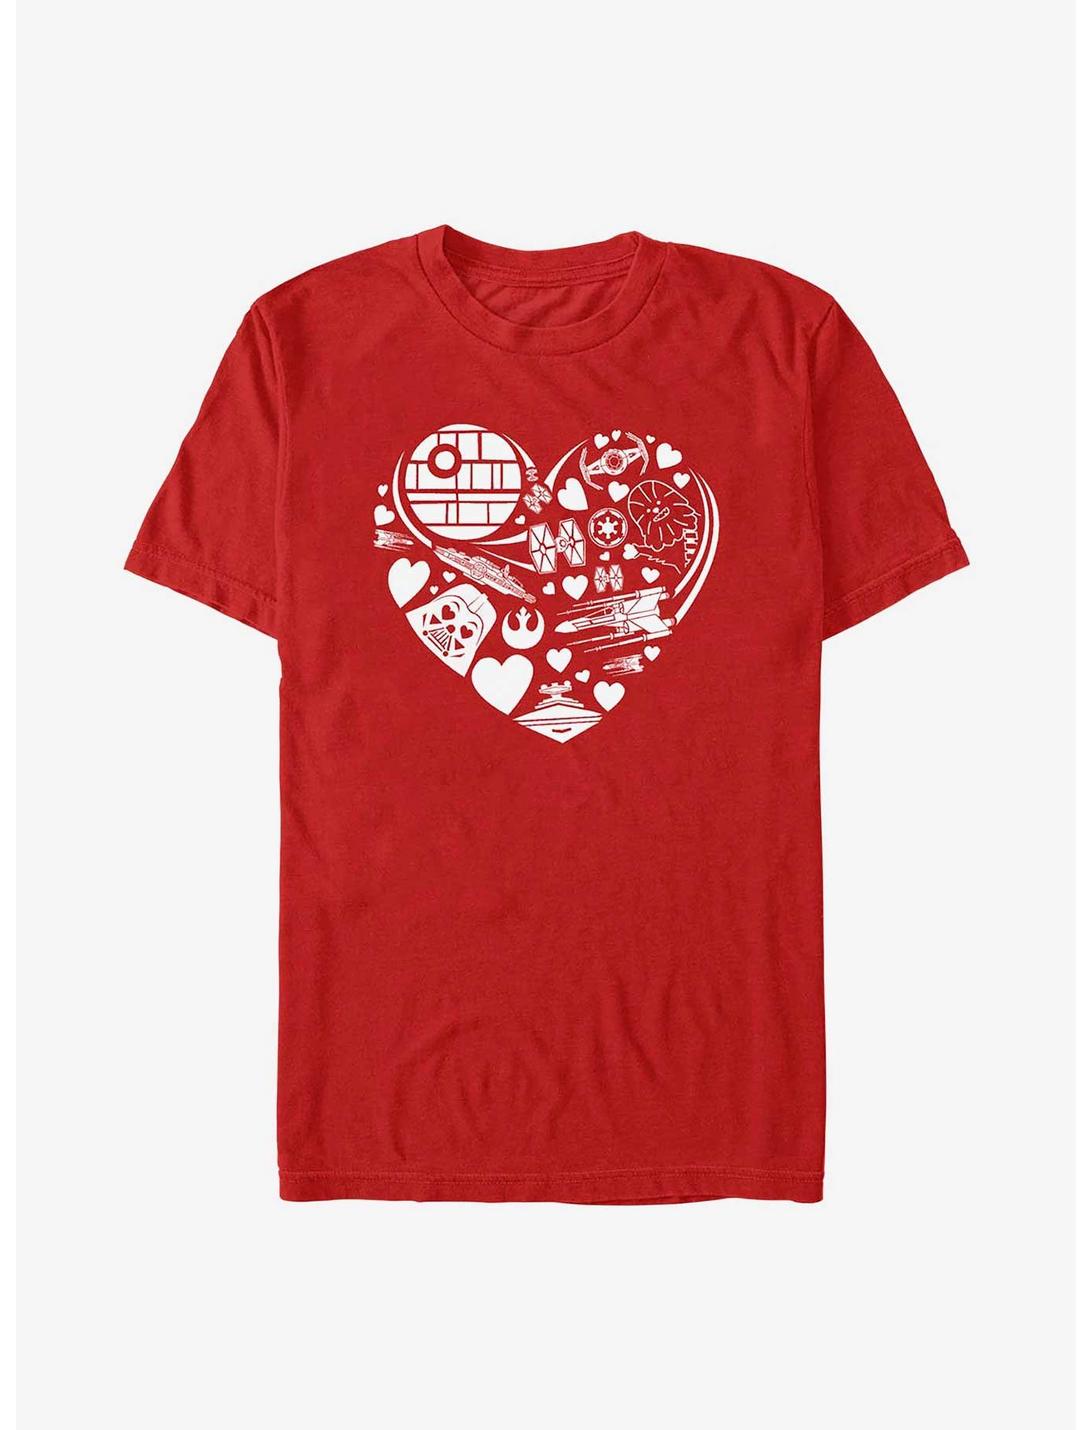 Star Wars Heart Ships Icons T-Shirt, RED, hi-res